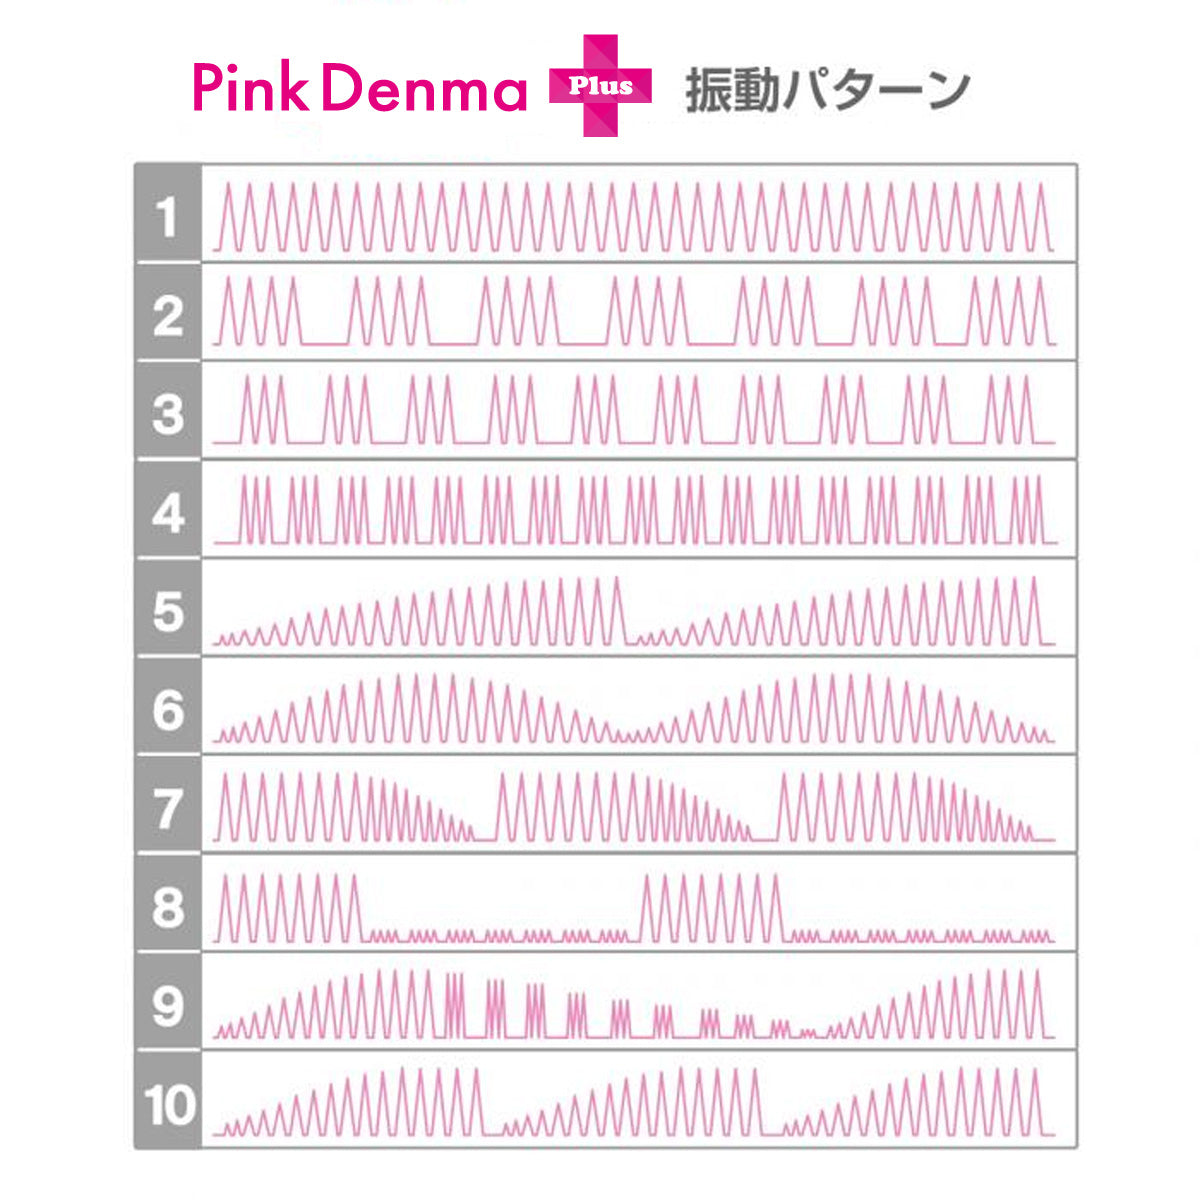 Pink Denma 1+ (Vibebar Edition)